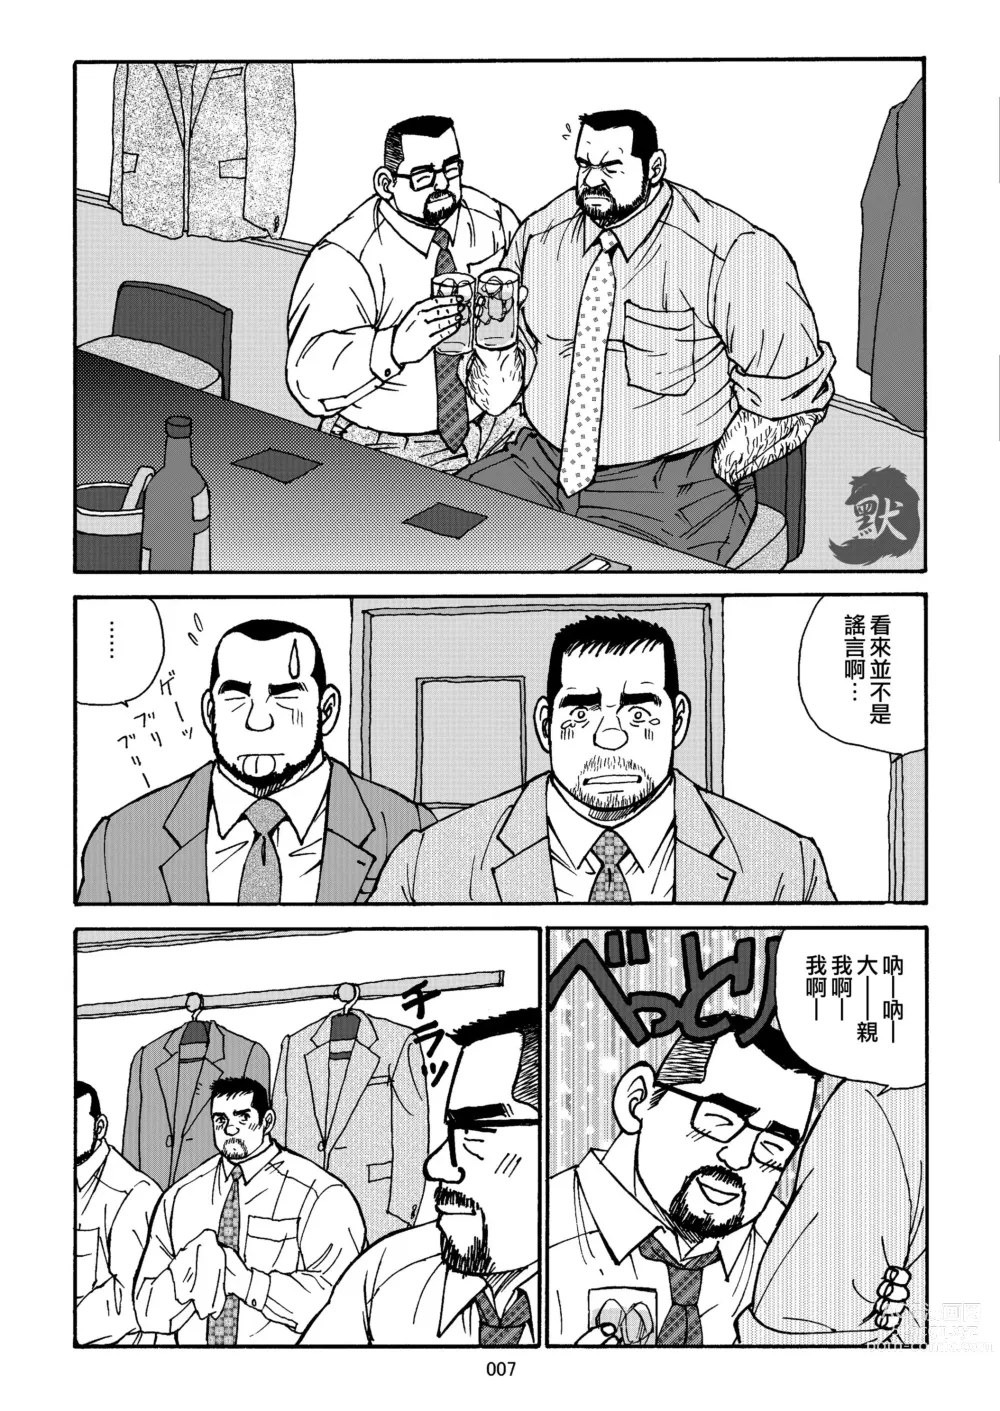 Page 7 of manga おいしい性活